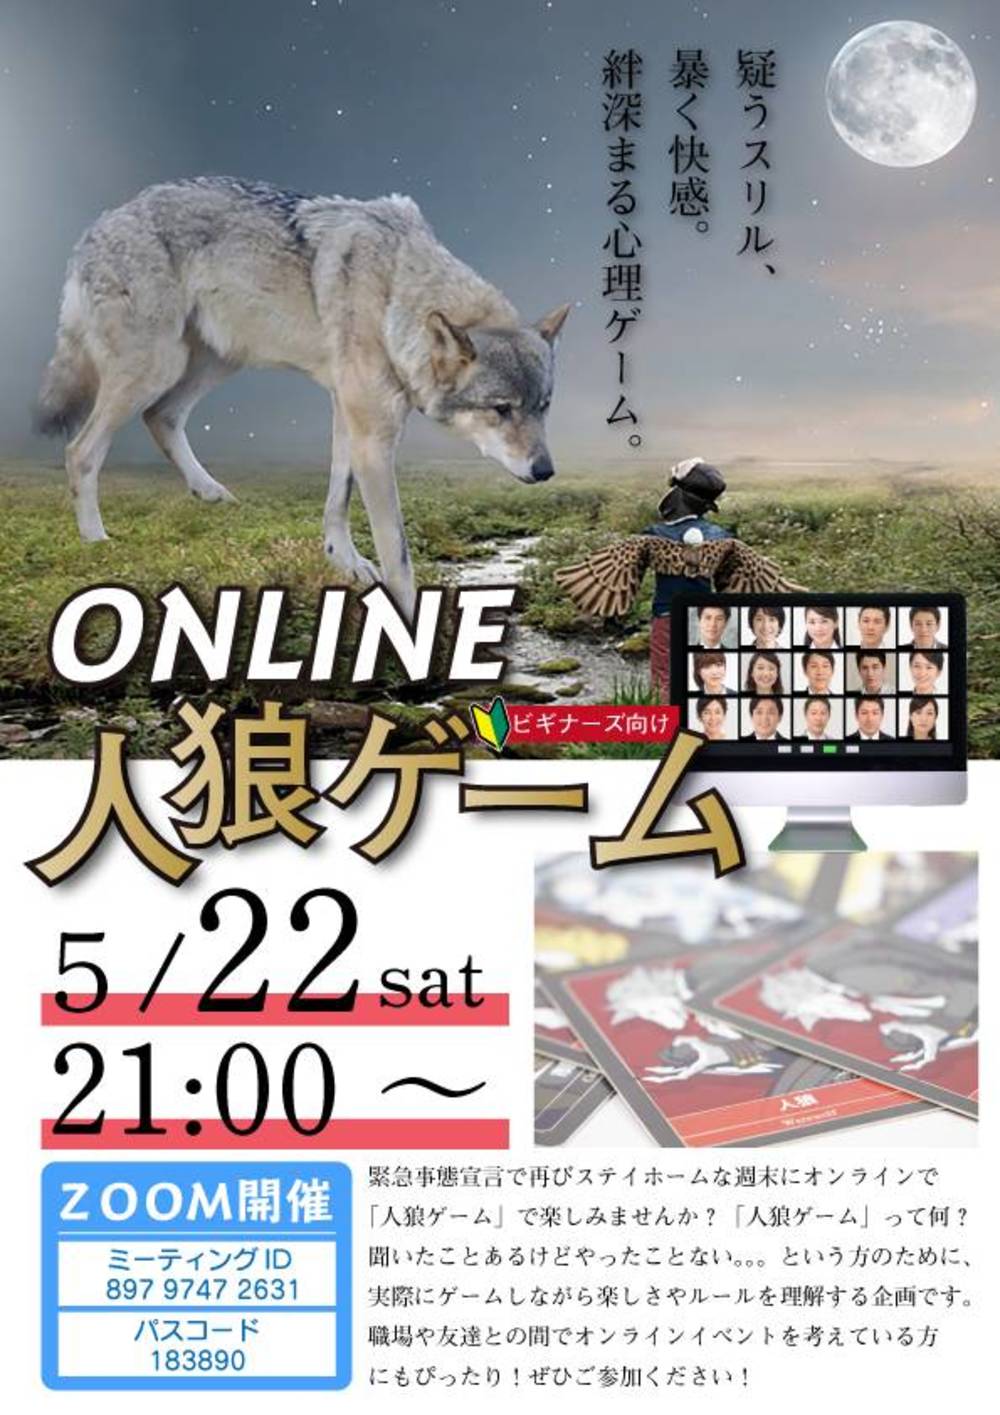 online 人狼ゲーム〜forビギナーズ〜